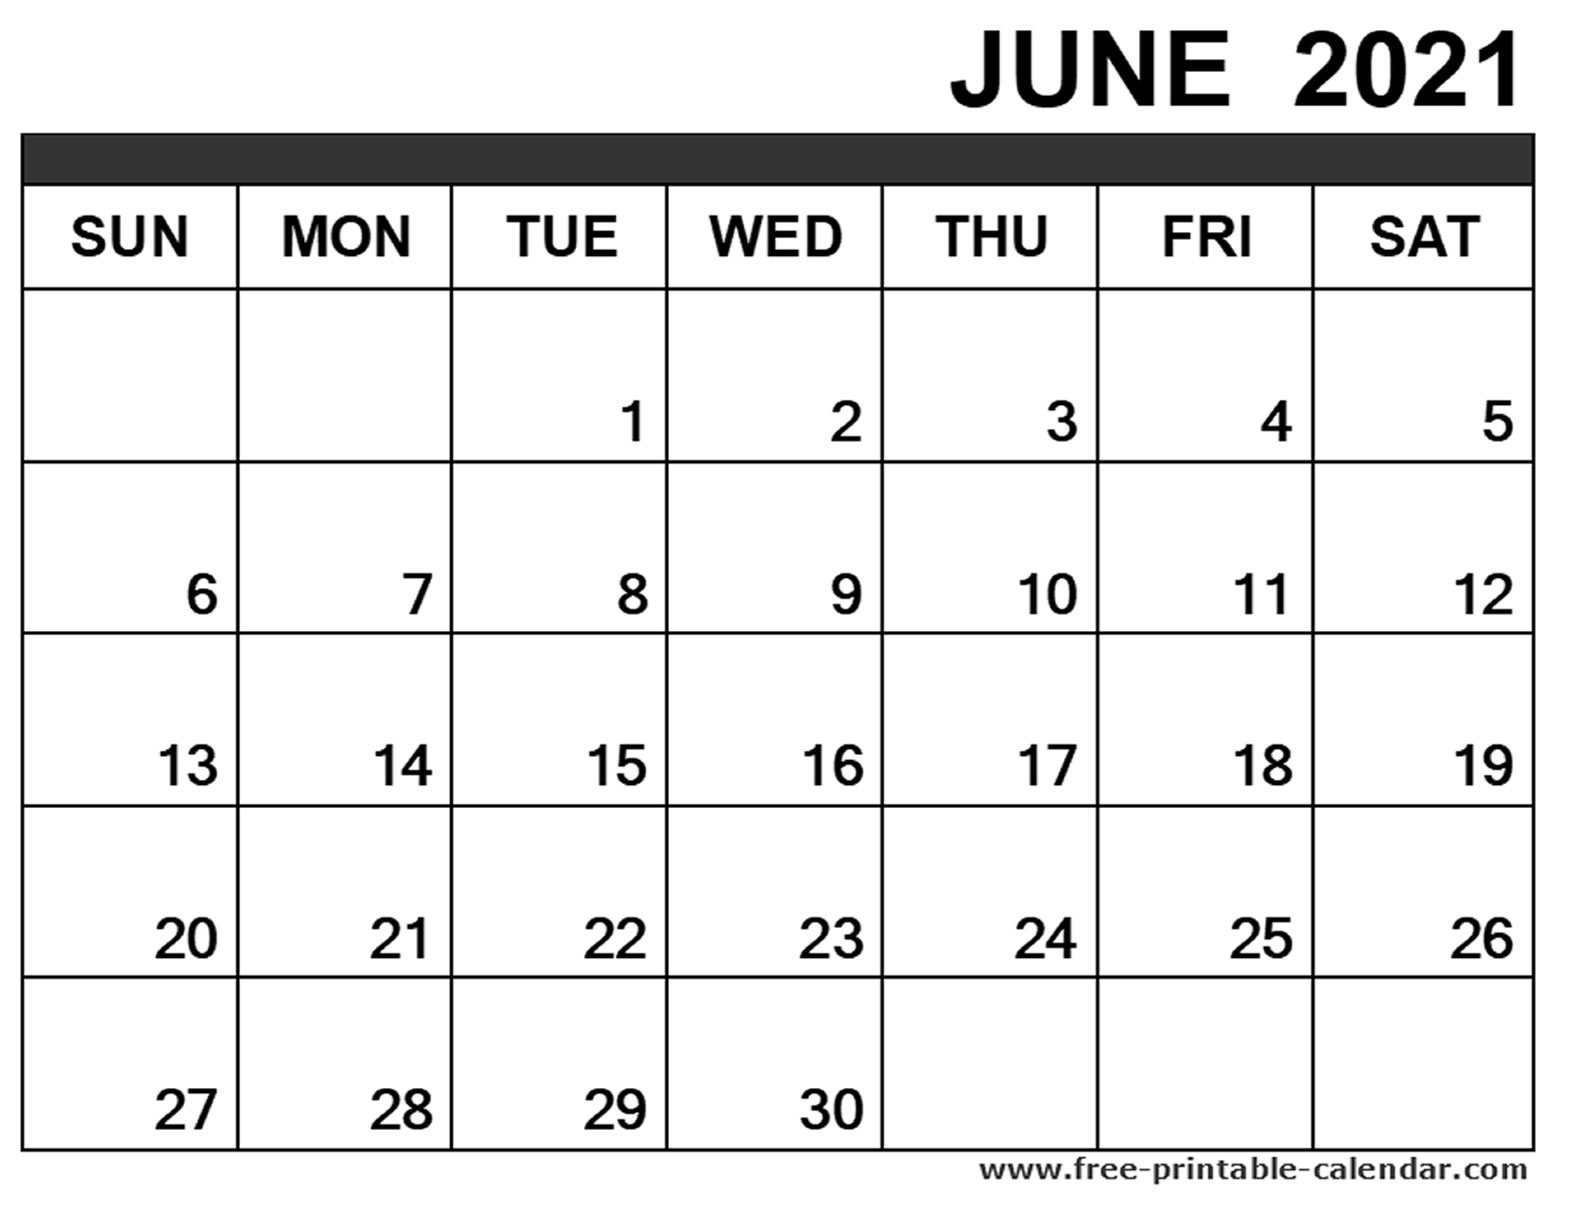 June 2021 Calendar Printable - Free-Printable-Calendar